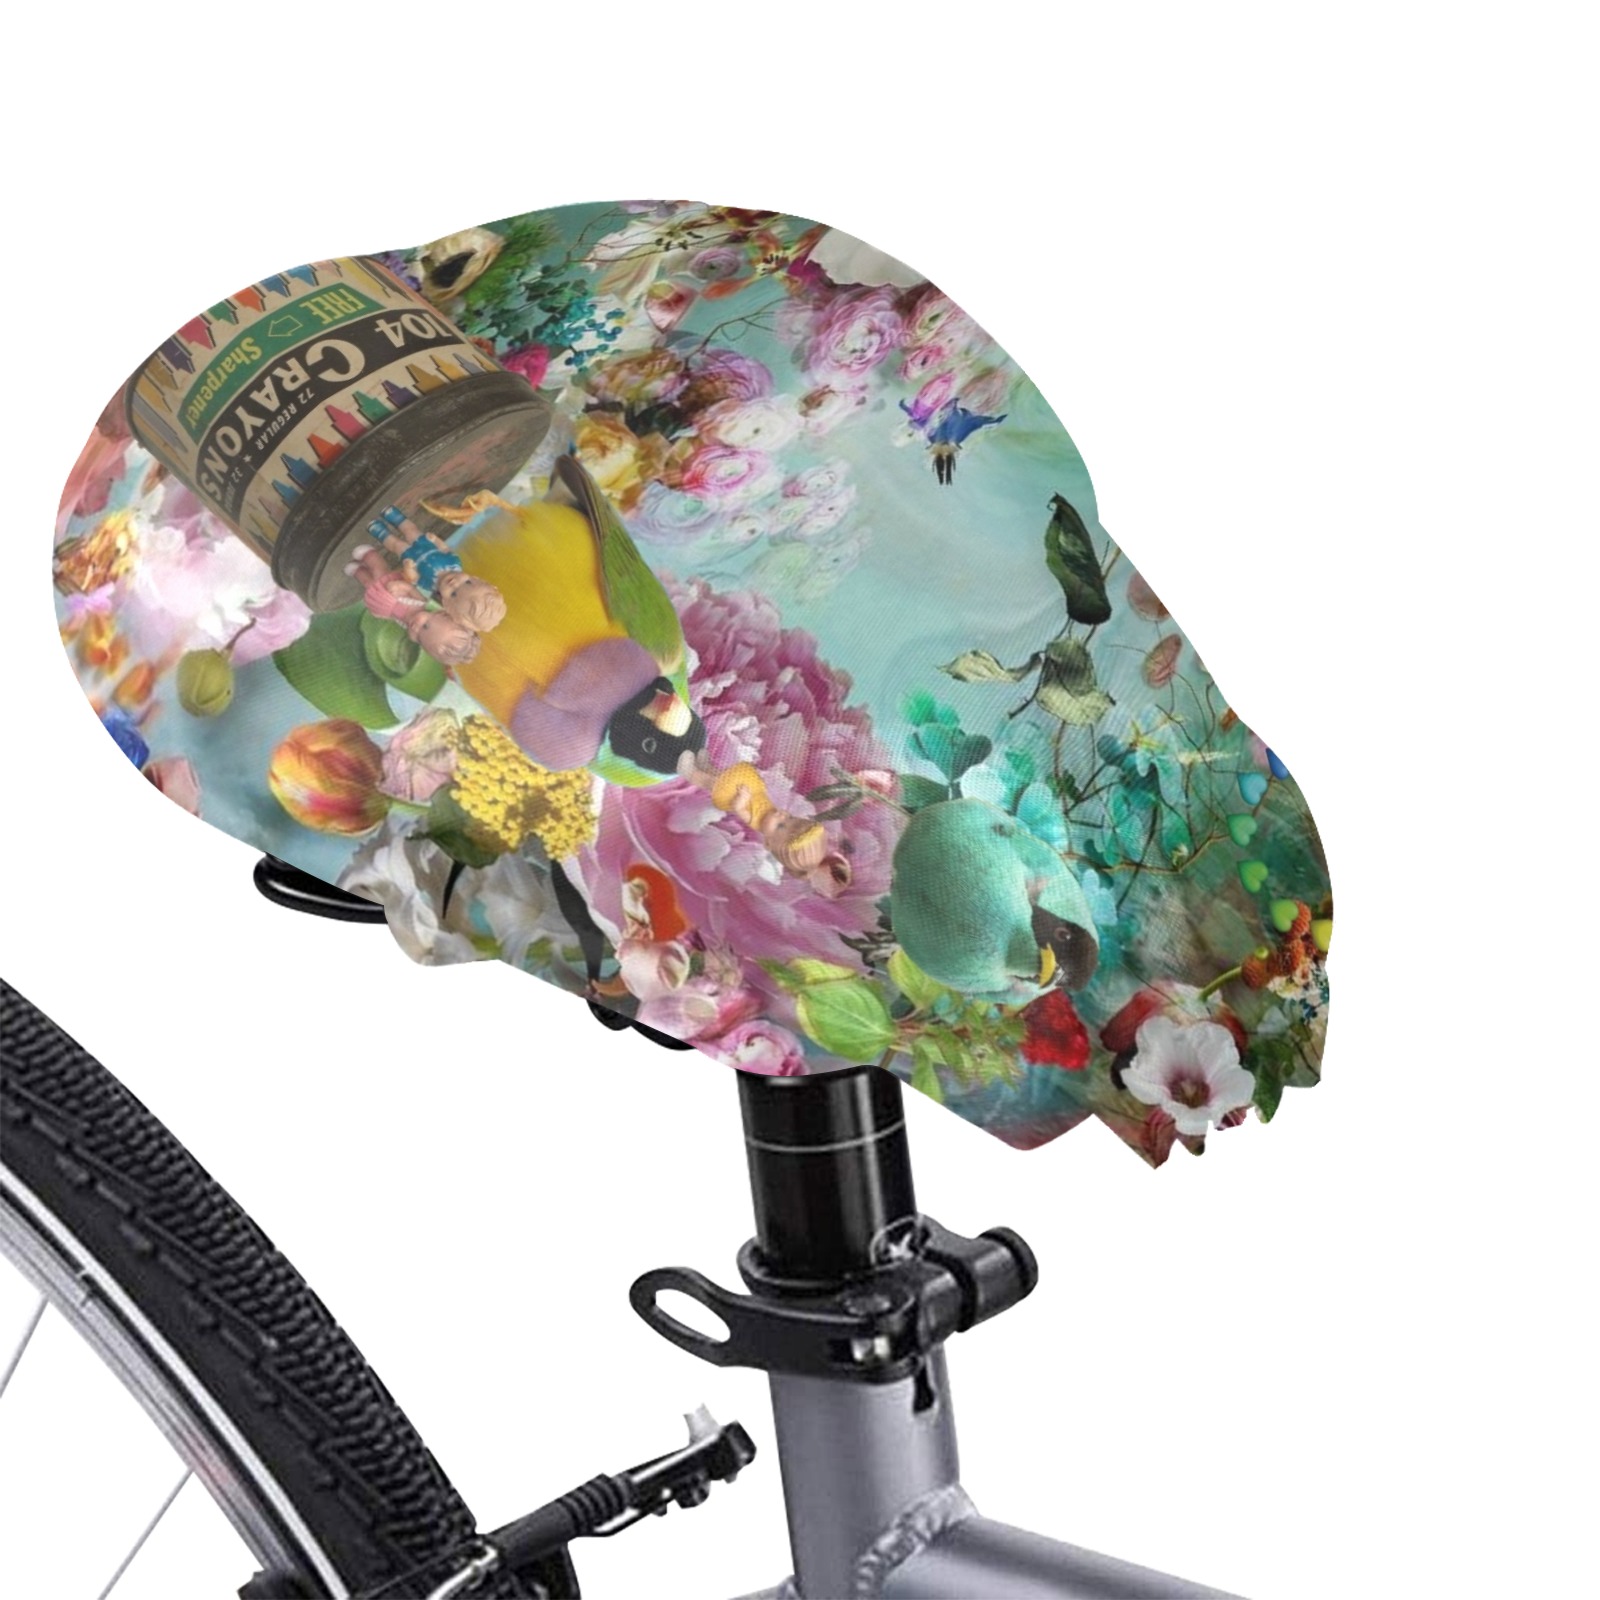 The Secret Garden Waterproof Bicycle Seat Cover